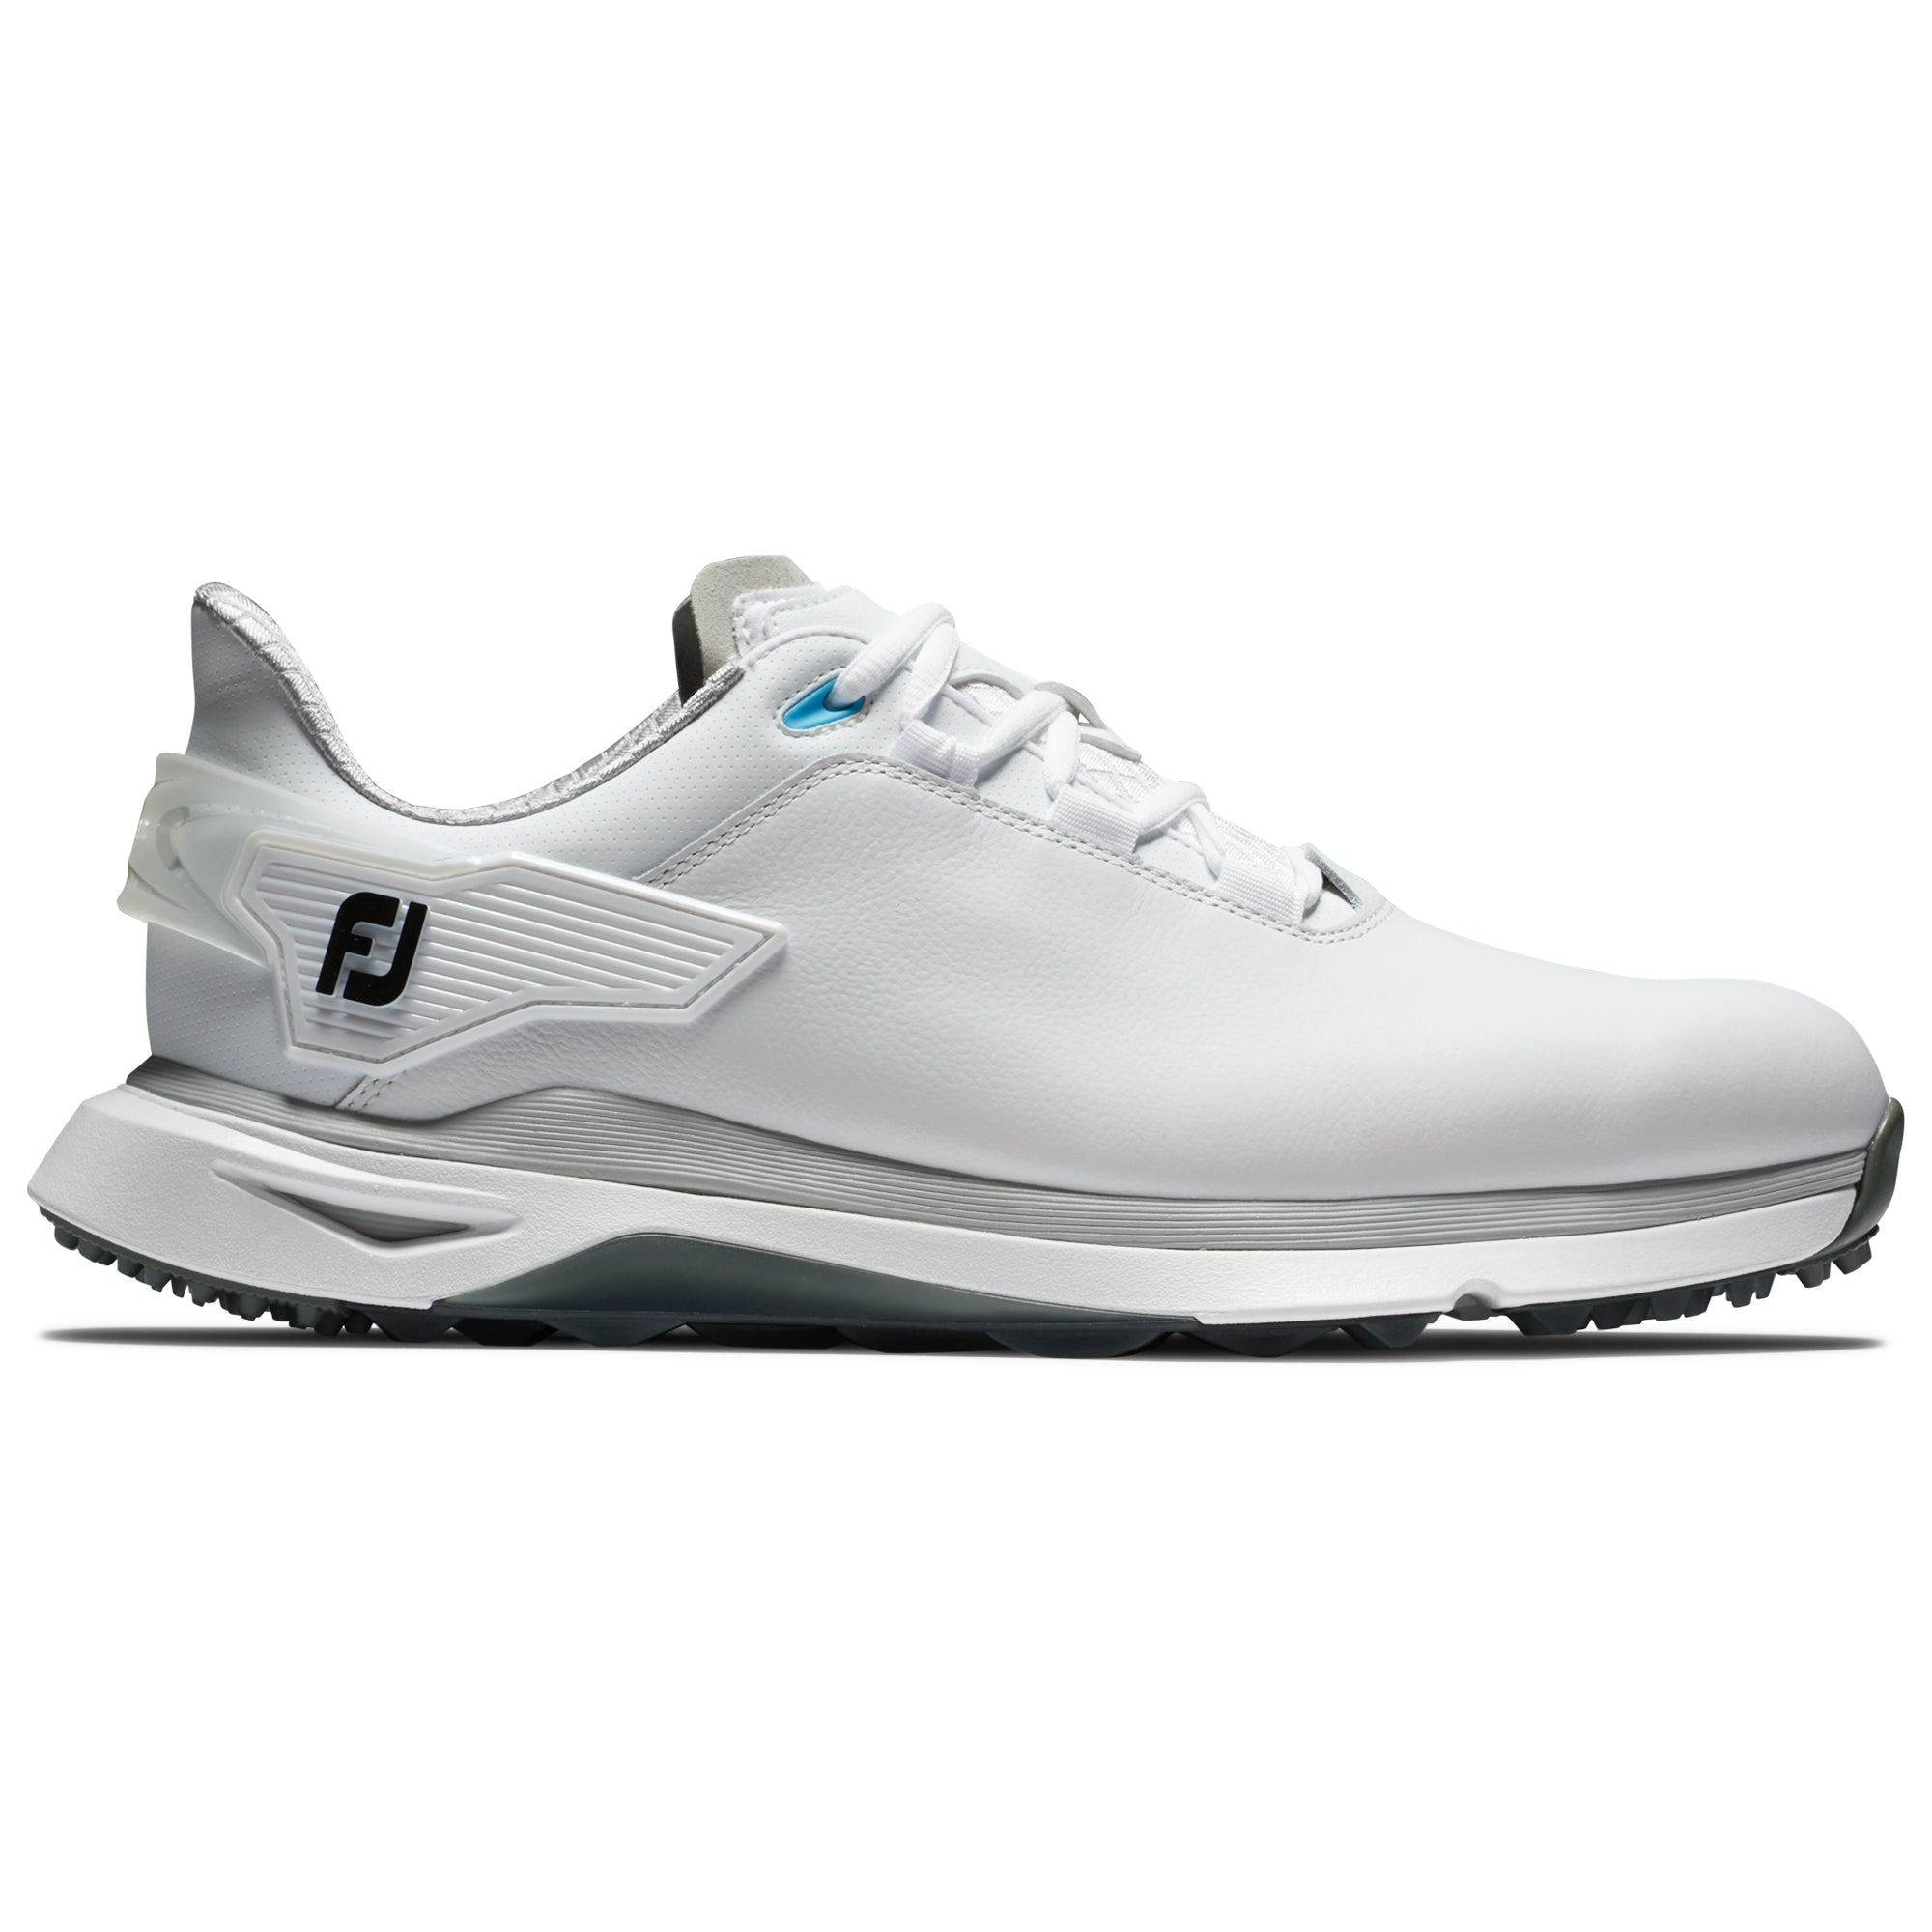 footjoy-pro-slx-golf-shoes-56912-white-grey